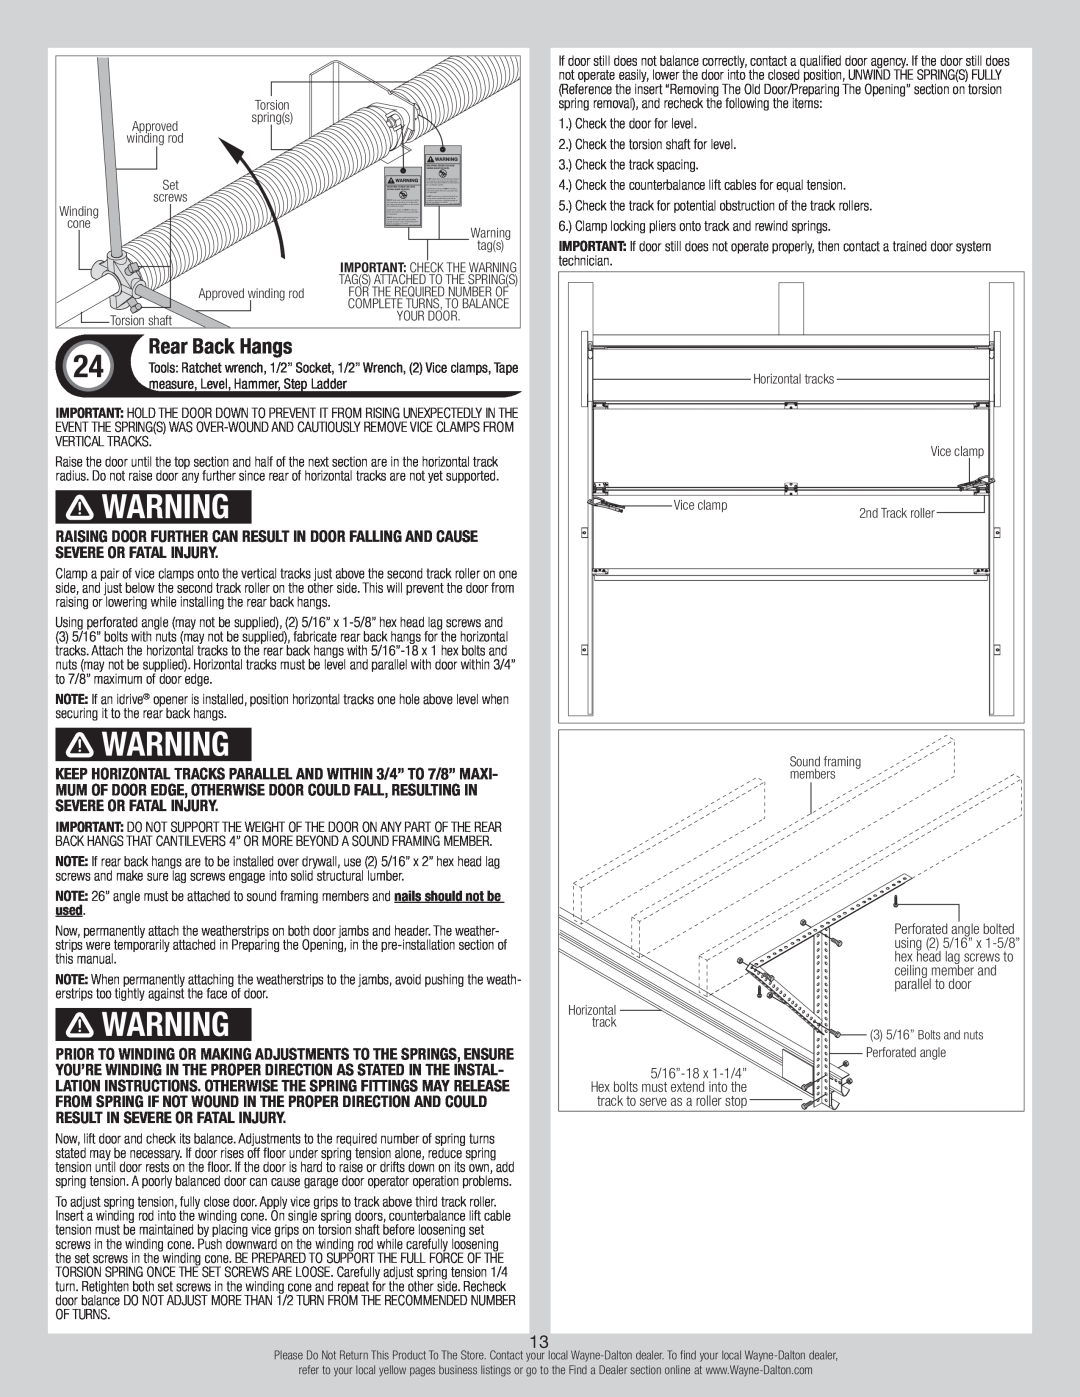 Wayne-Dalton 8700 installation instructions Rear Back Hangs 